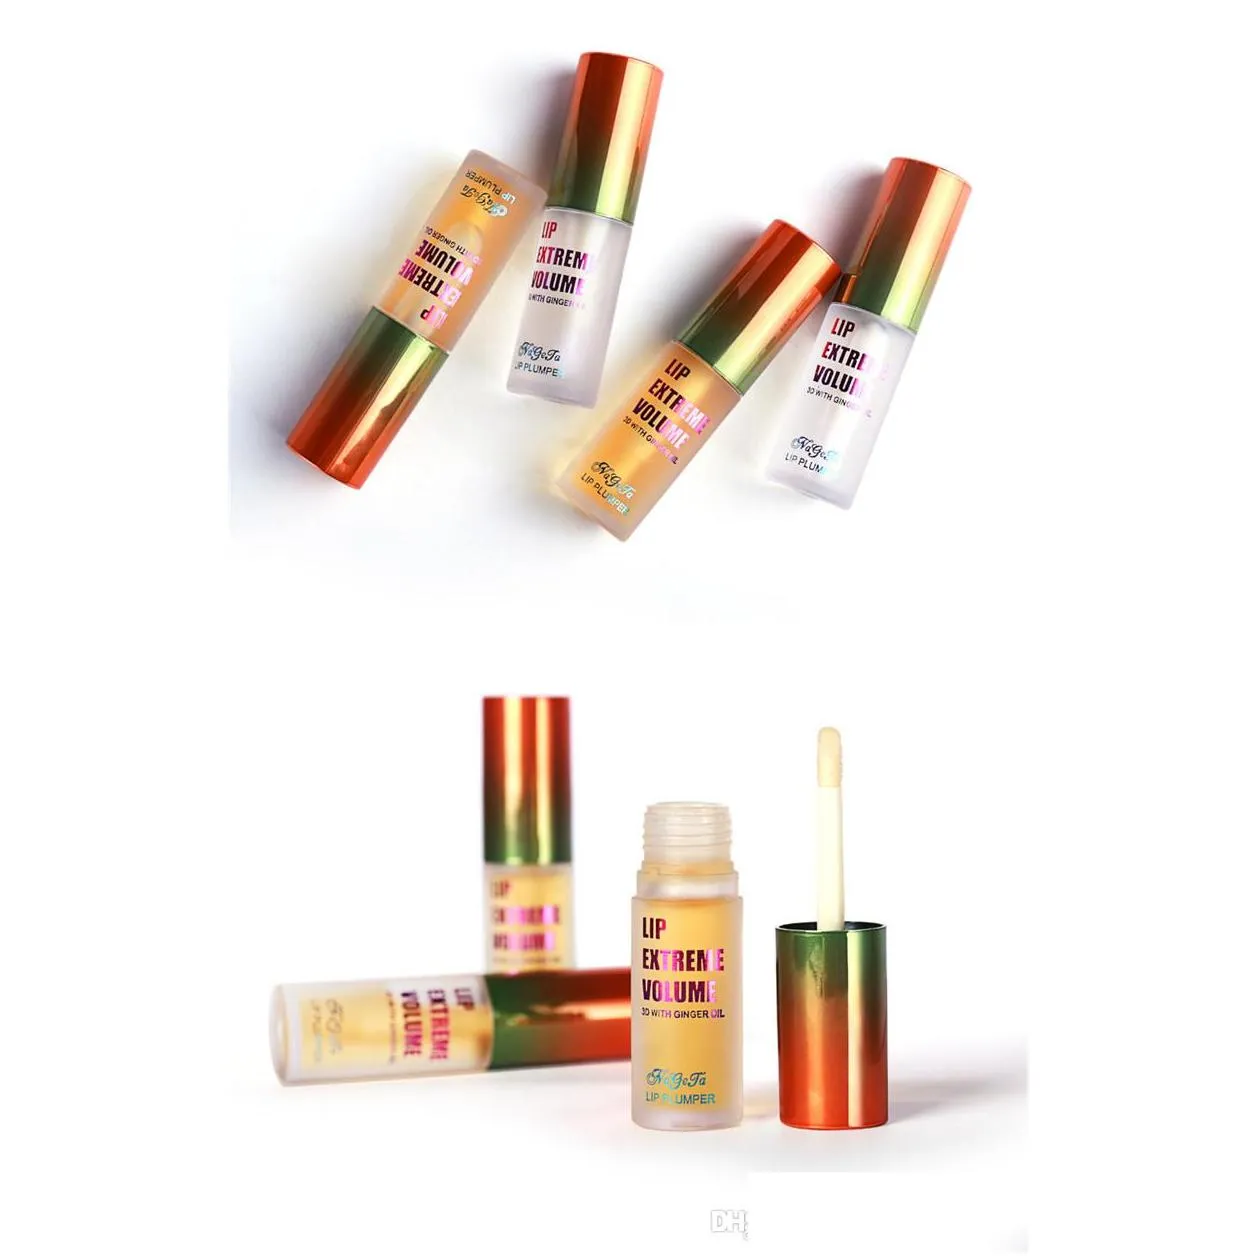 nageta lip plumper set ginger peppermint lip oil enhances plump lips care tool essence oil lip balm plant essence